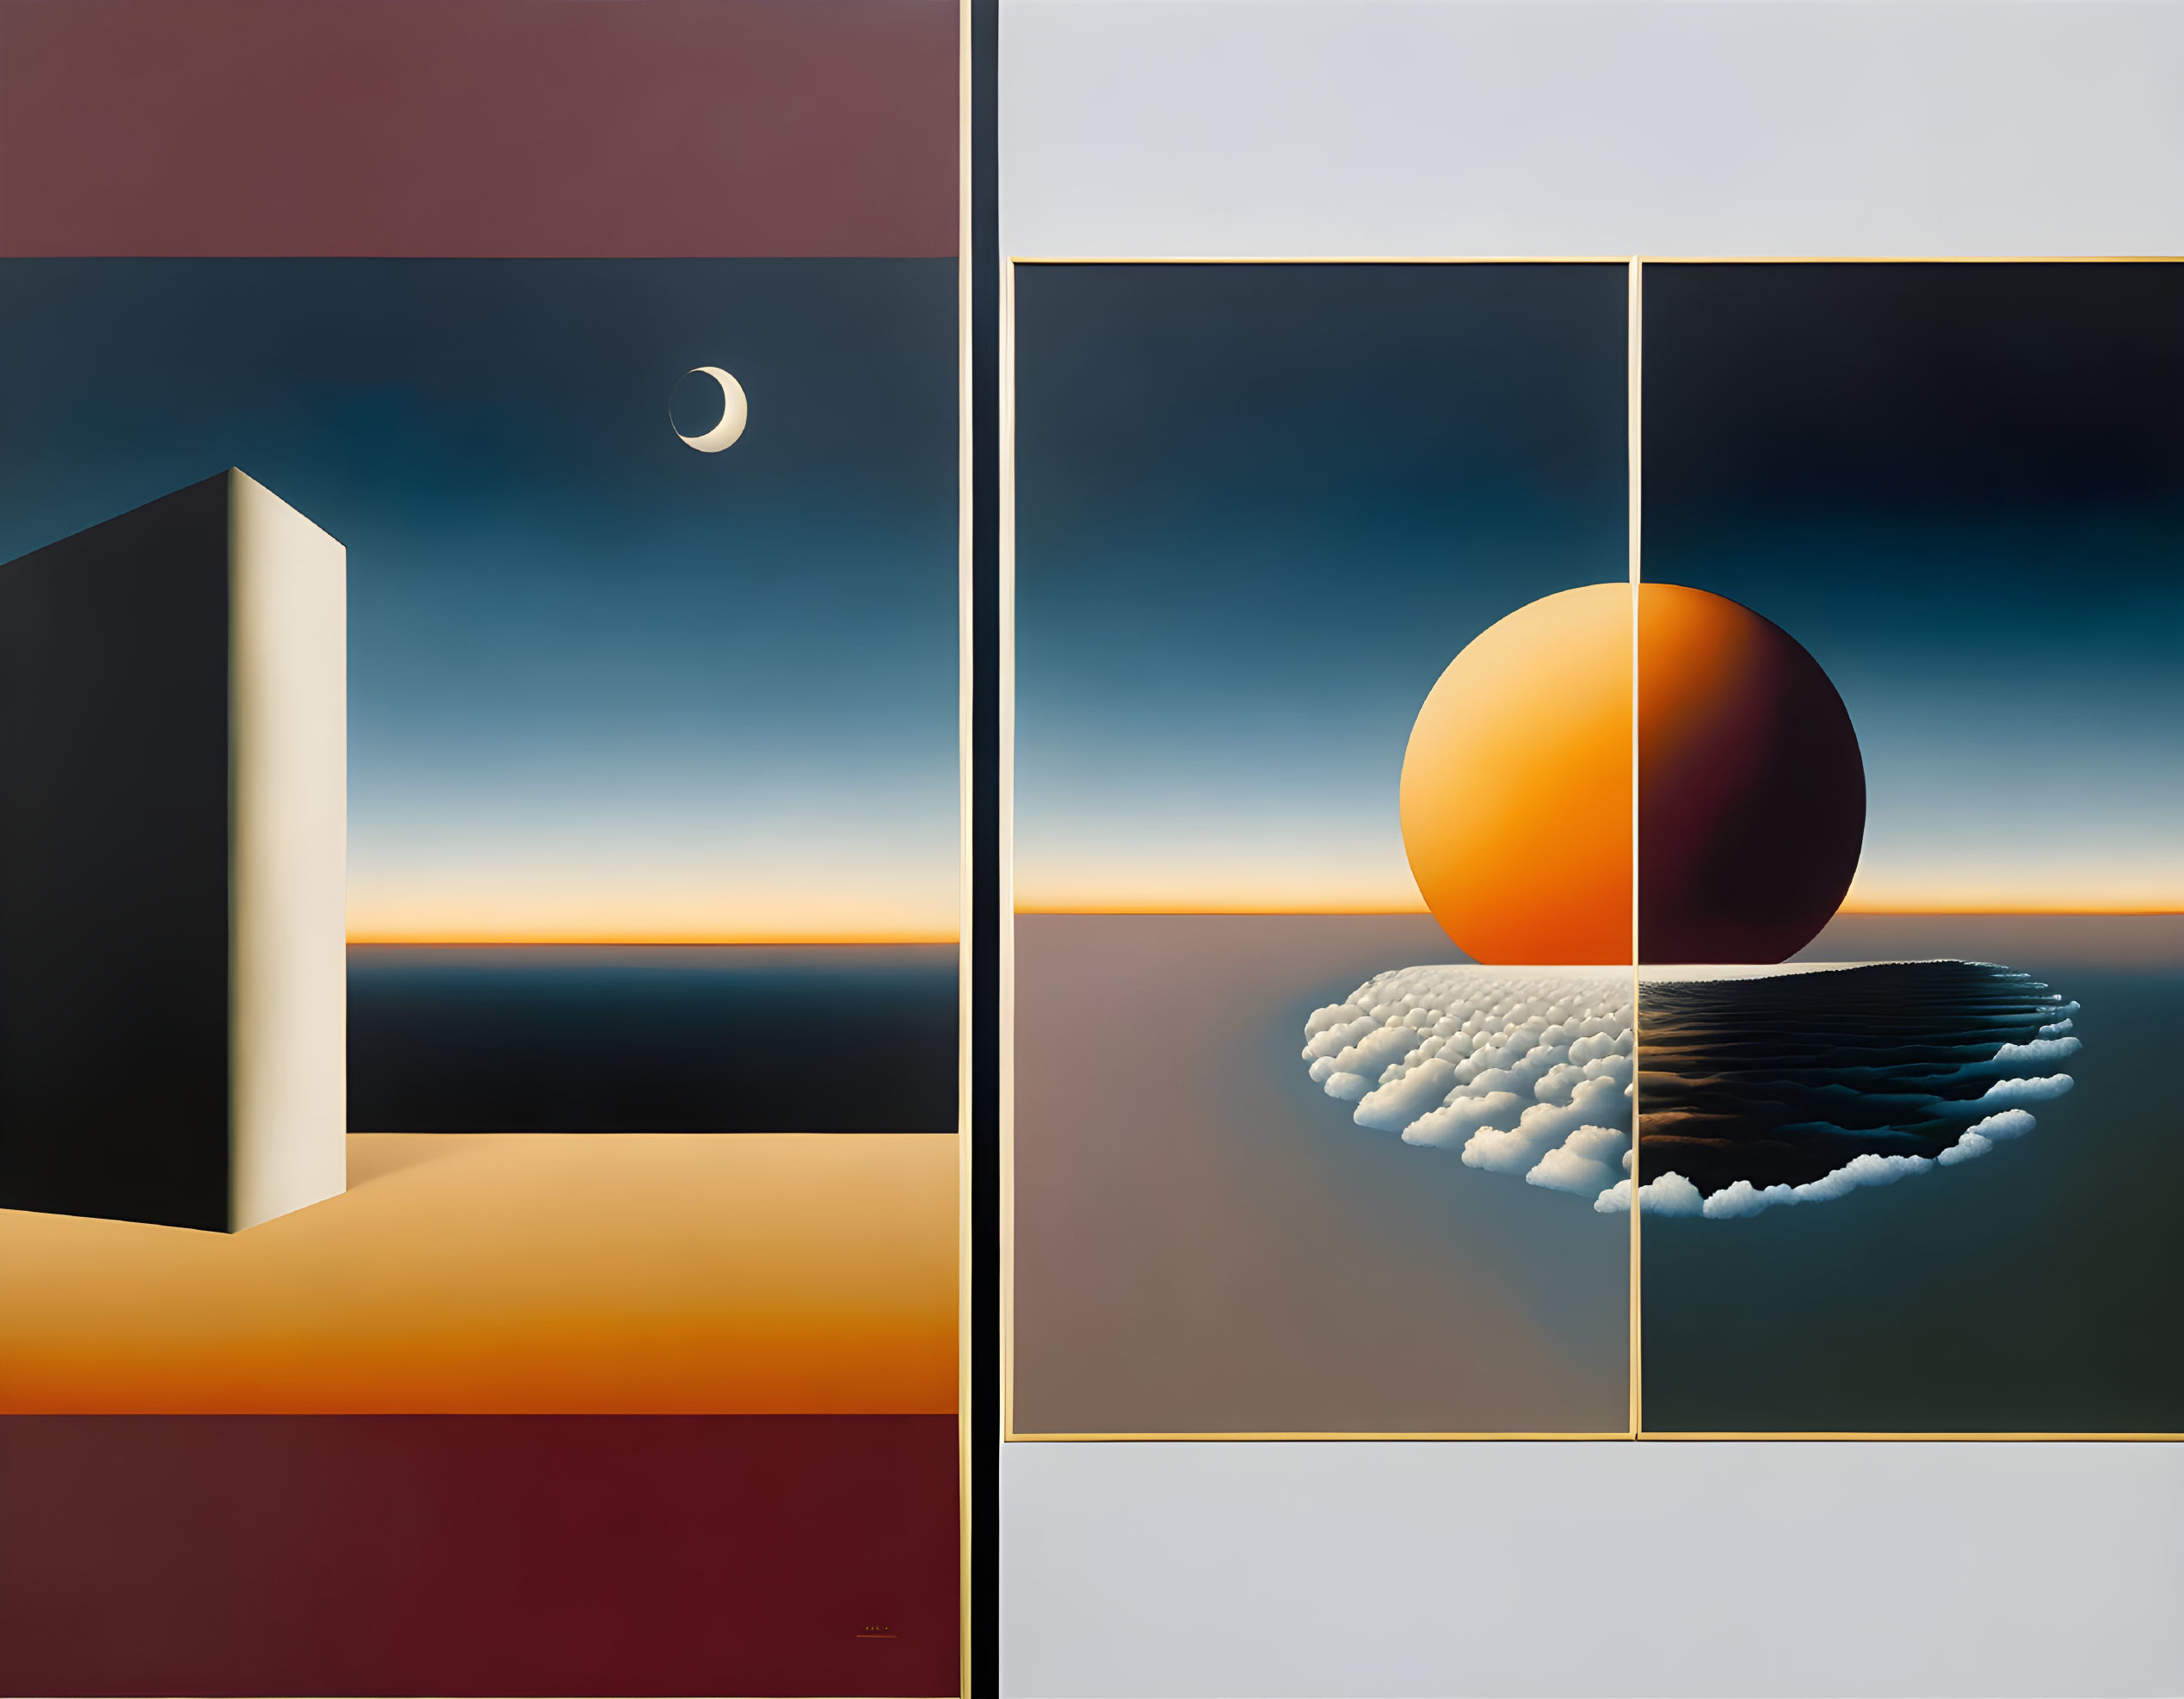 Geometric abstract art: Dark structure, setting sun, crescent moon.